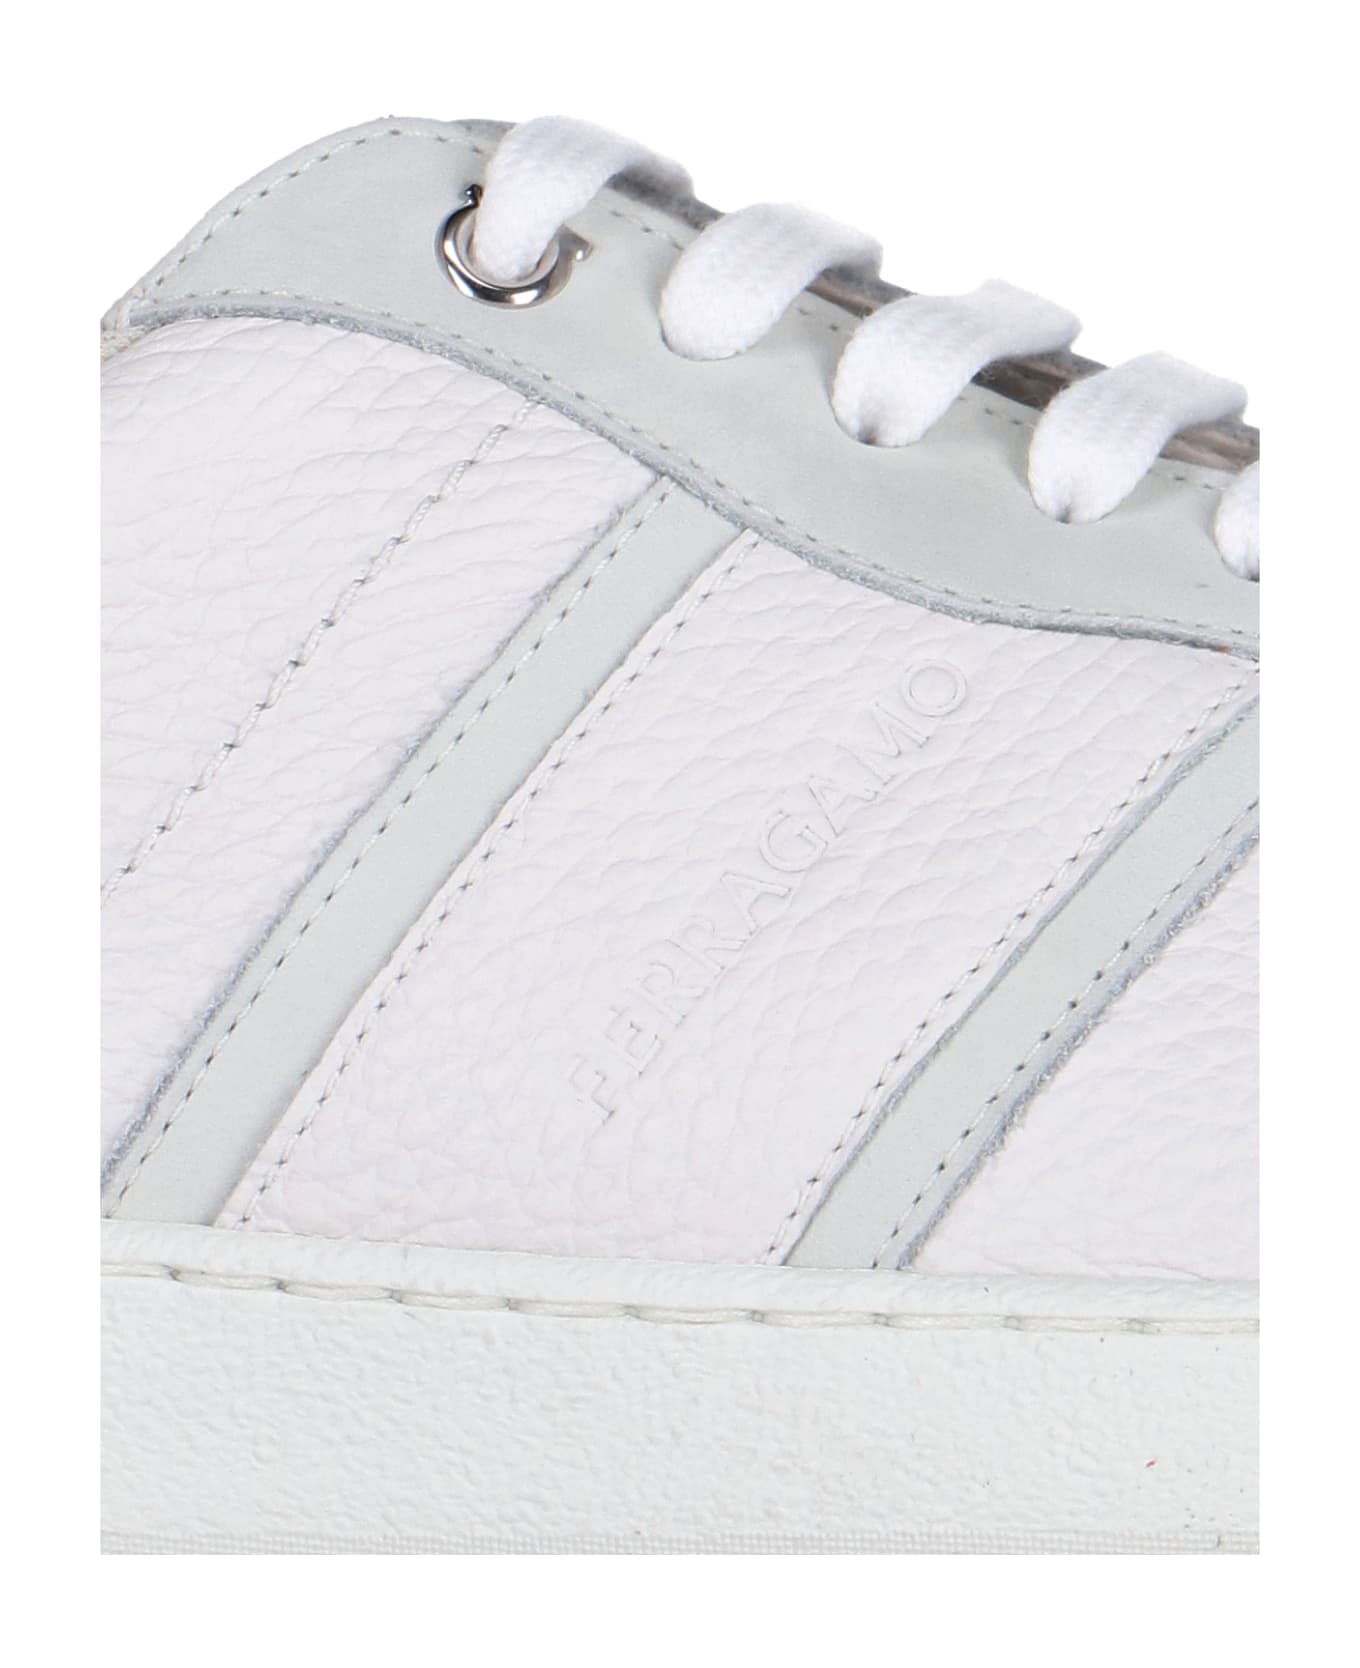 Ferragamo Low Logo Sneakers - White, blue スニーカー